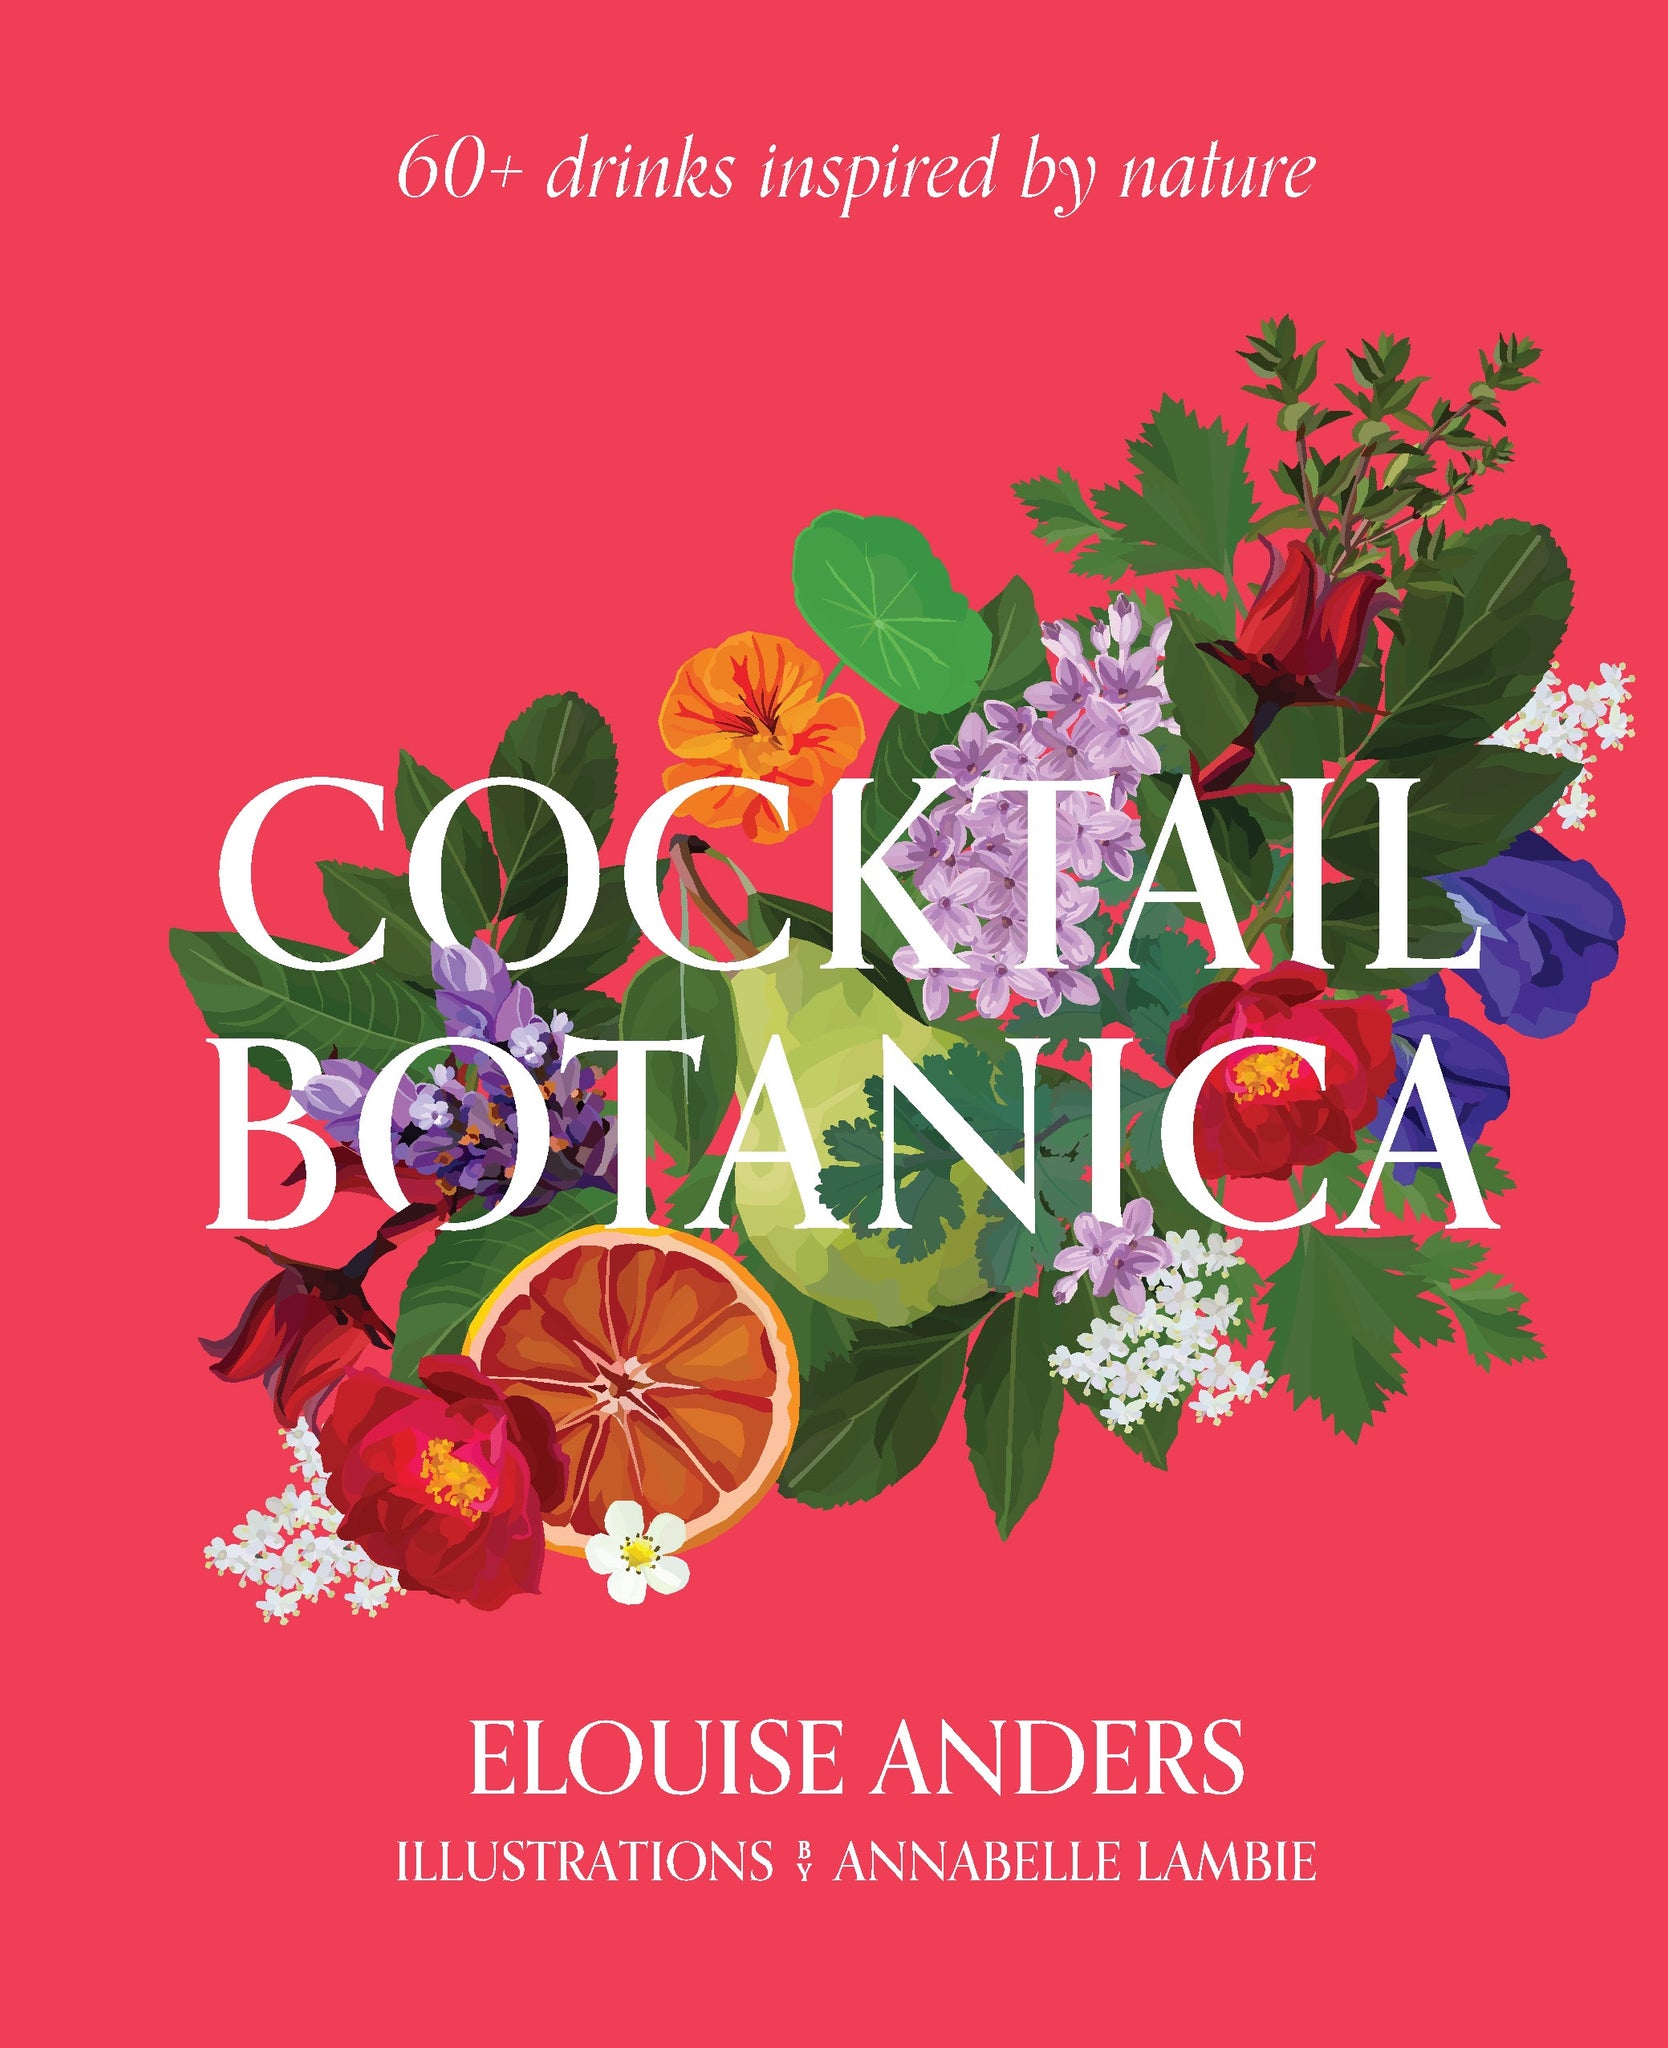 Cocktail Botanica Book